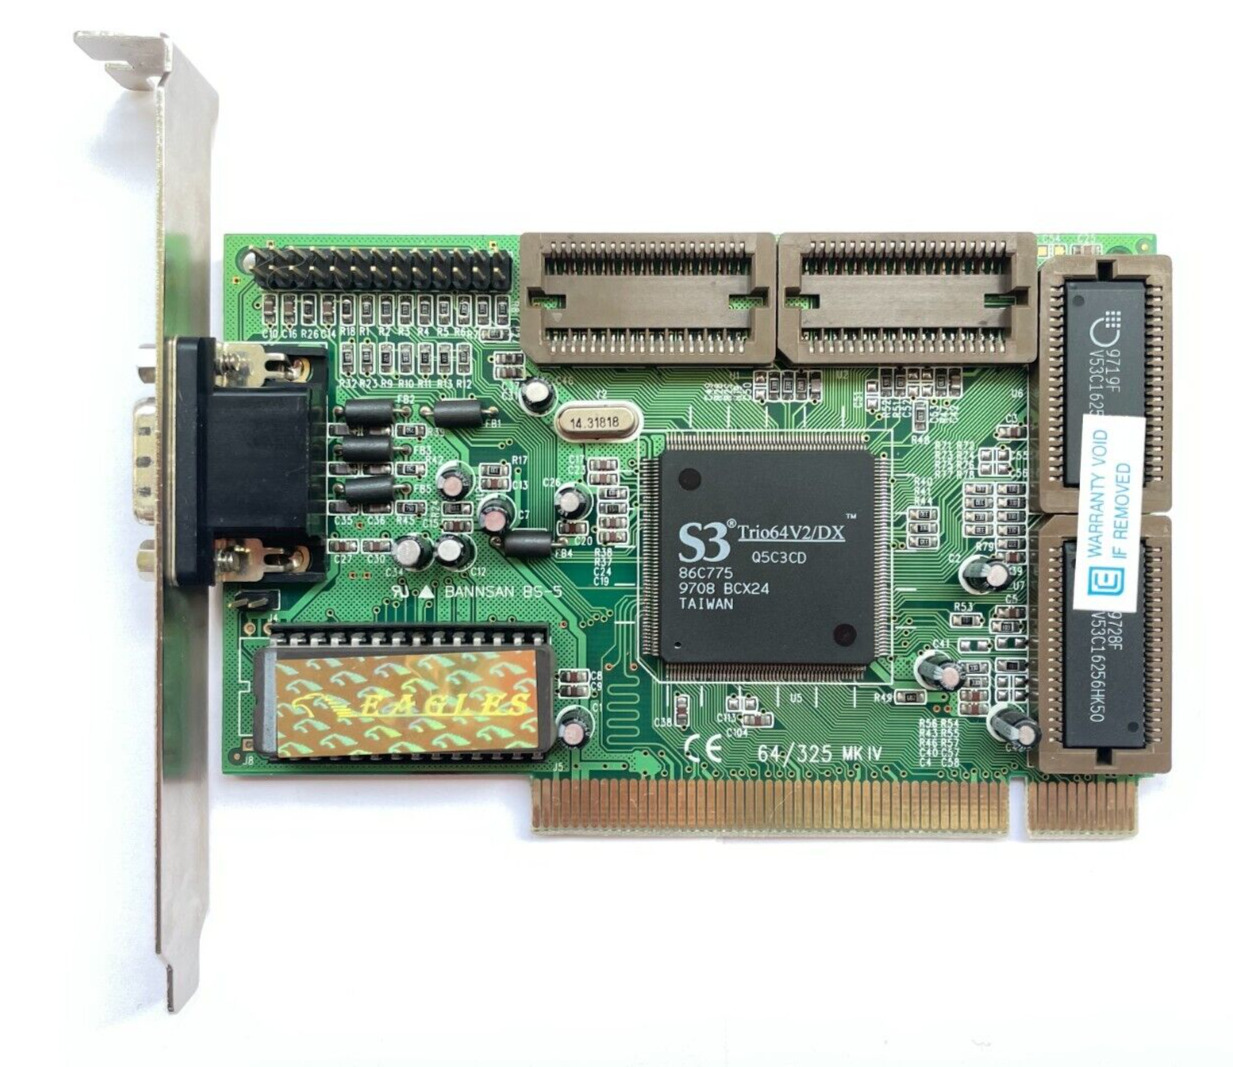 Eagles S3 Trio64 V2/DX 86C775 1Mb PCI Video Graphics Card